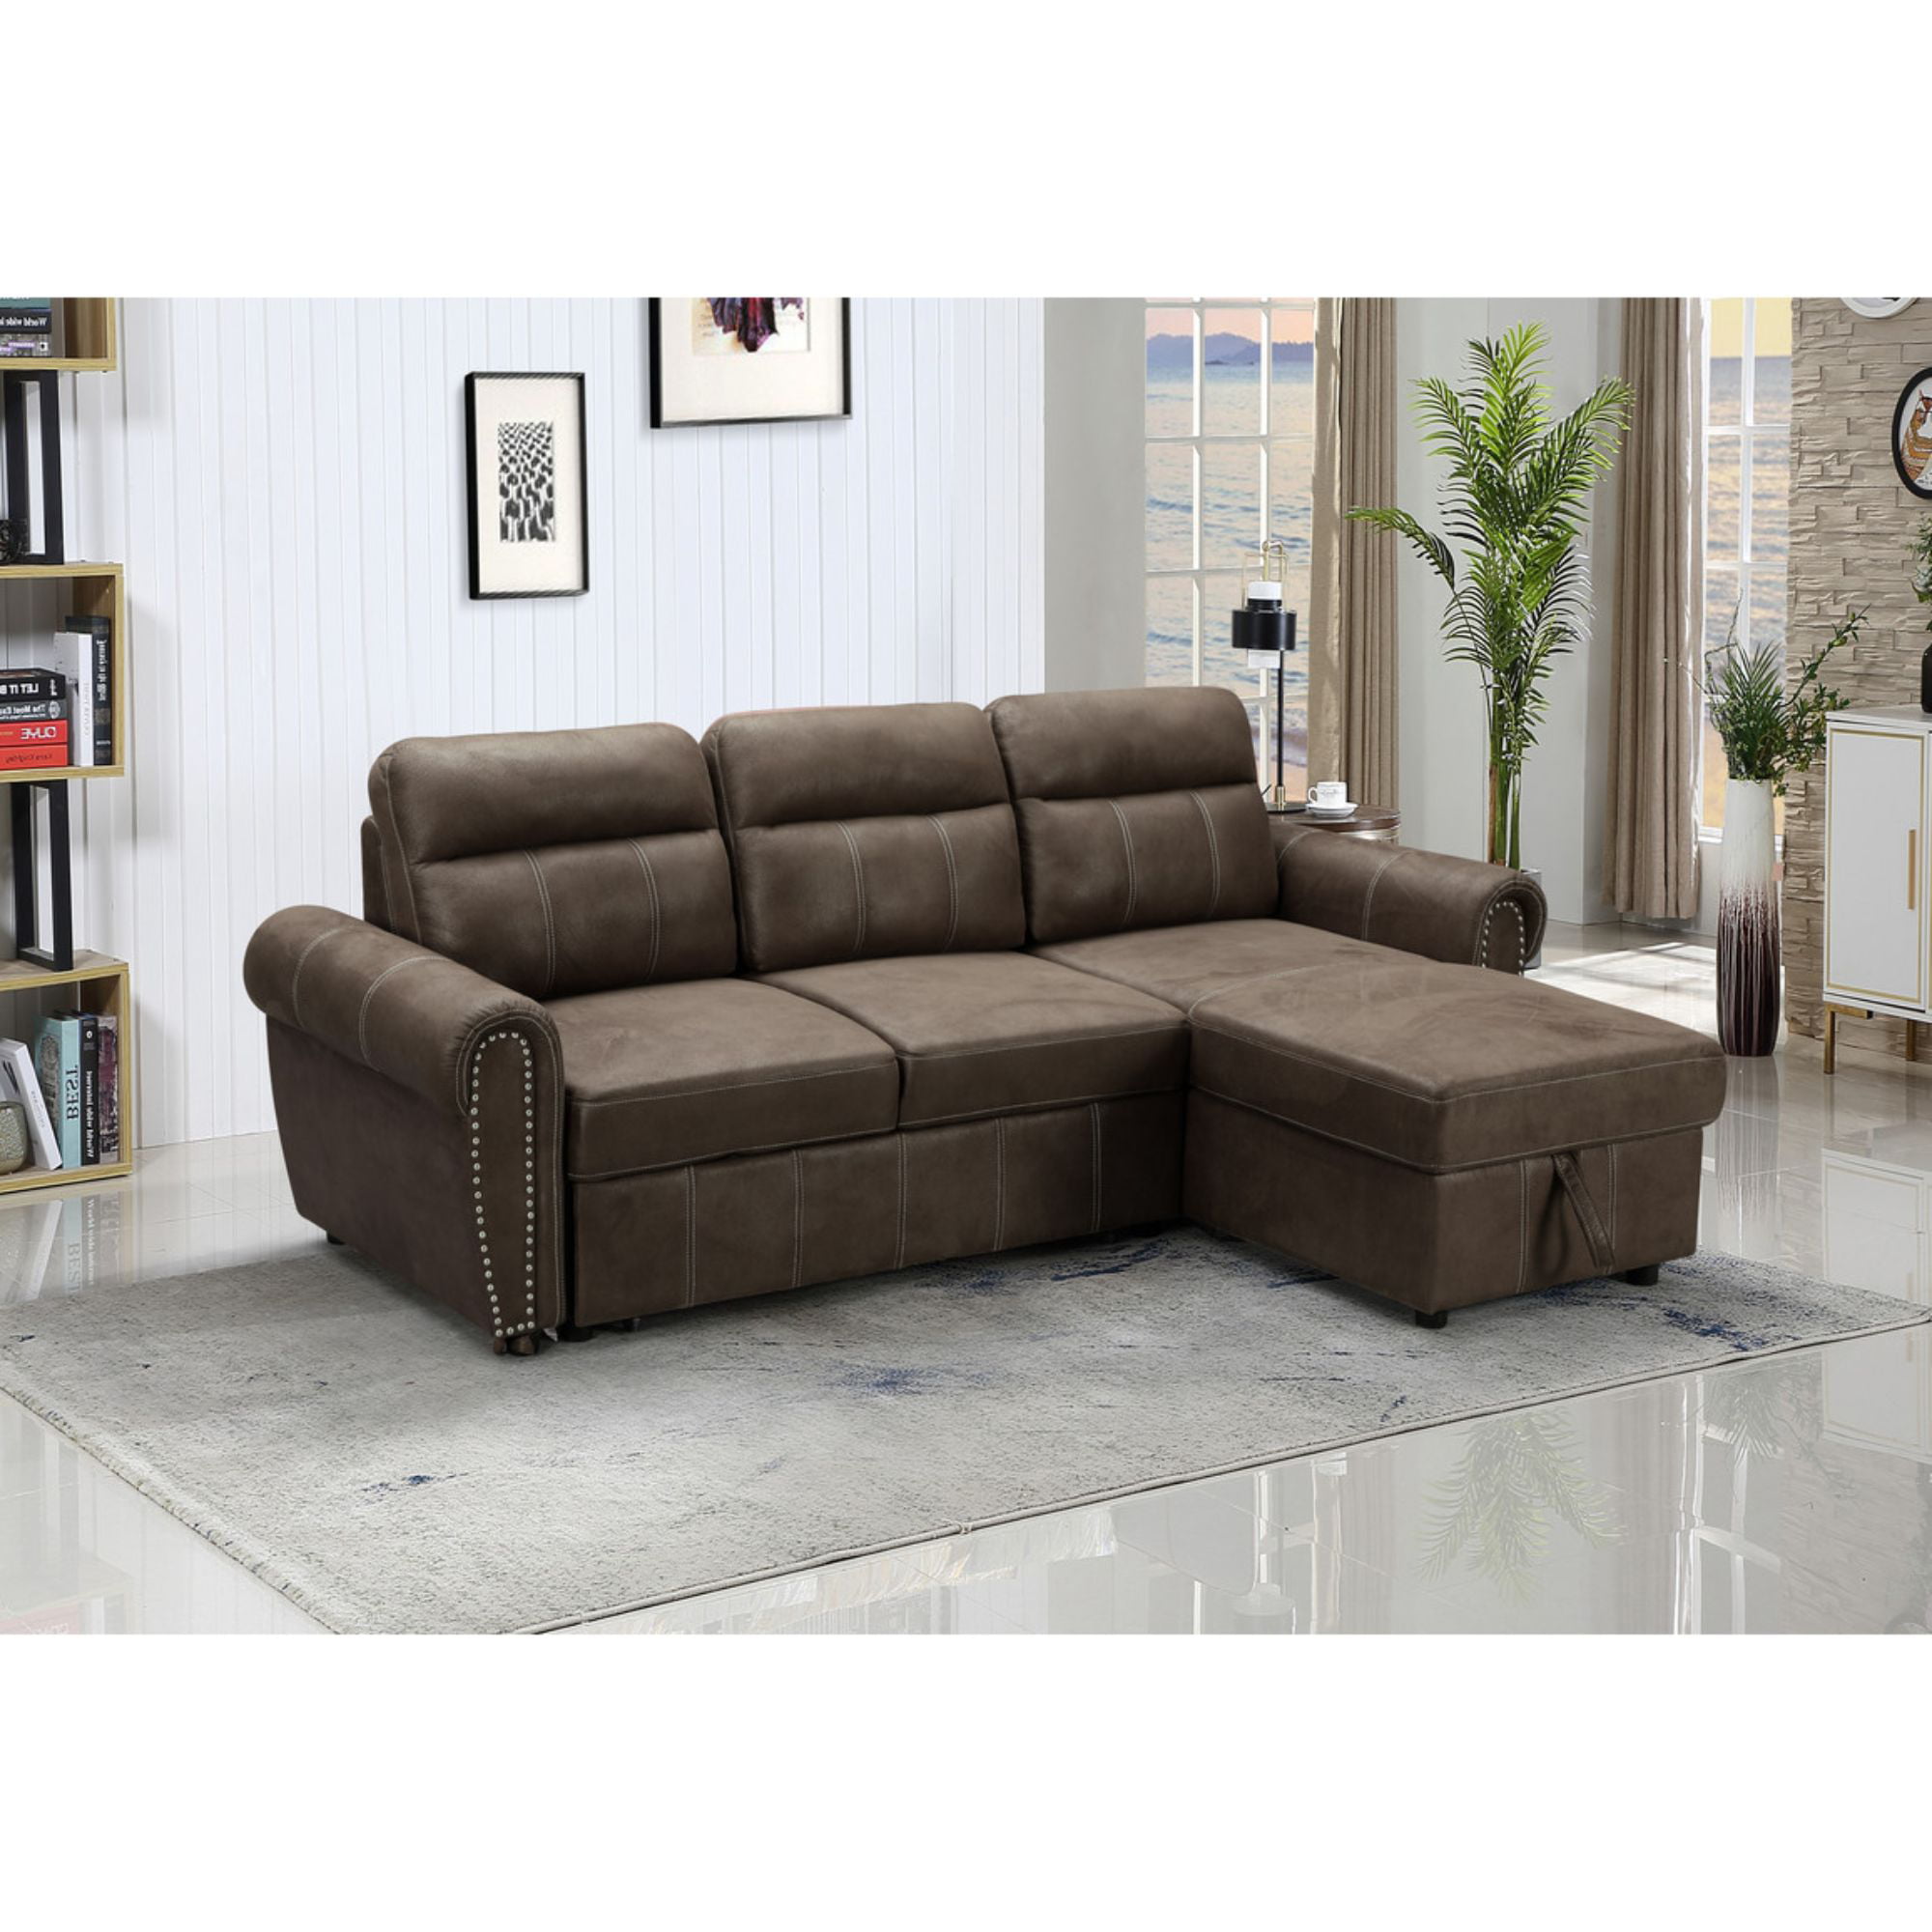 96 Ashton Brown Polished Microfiber, Tan Sectional Sleeper Sofa